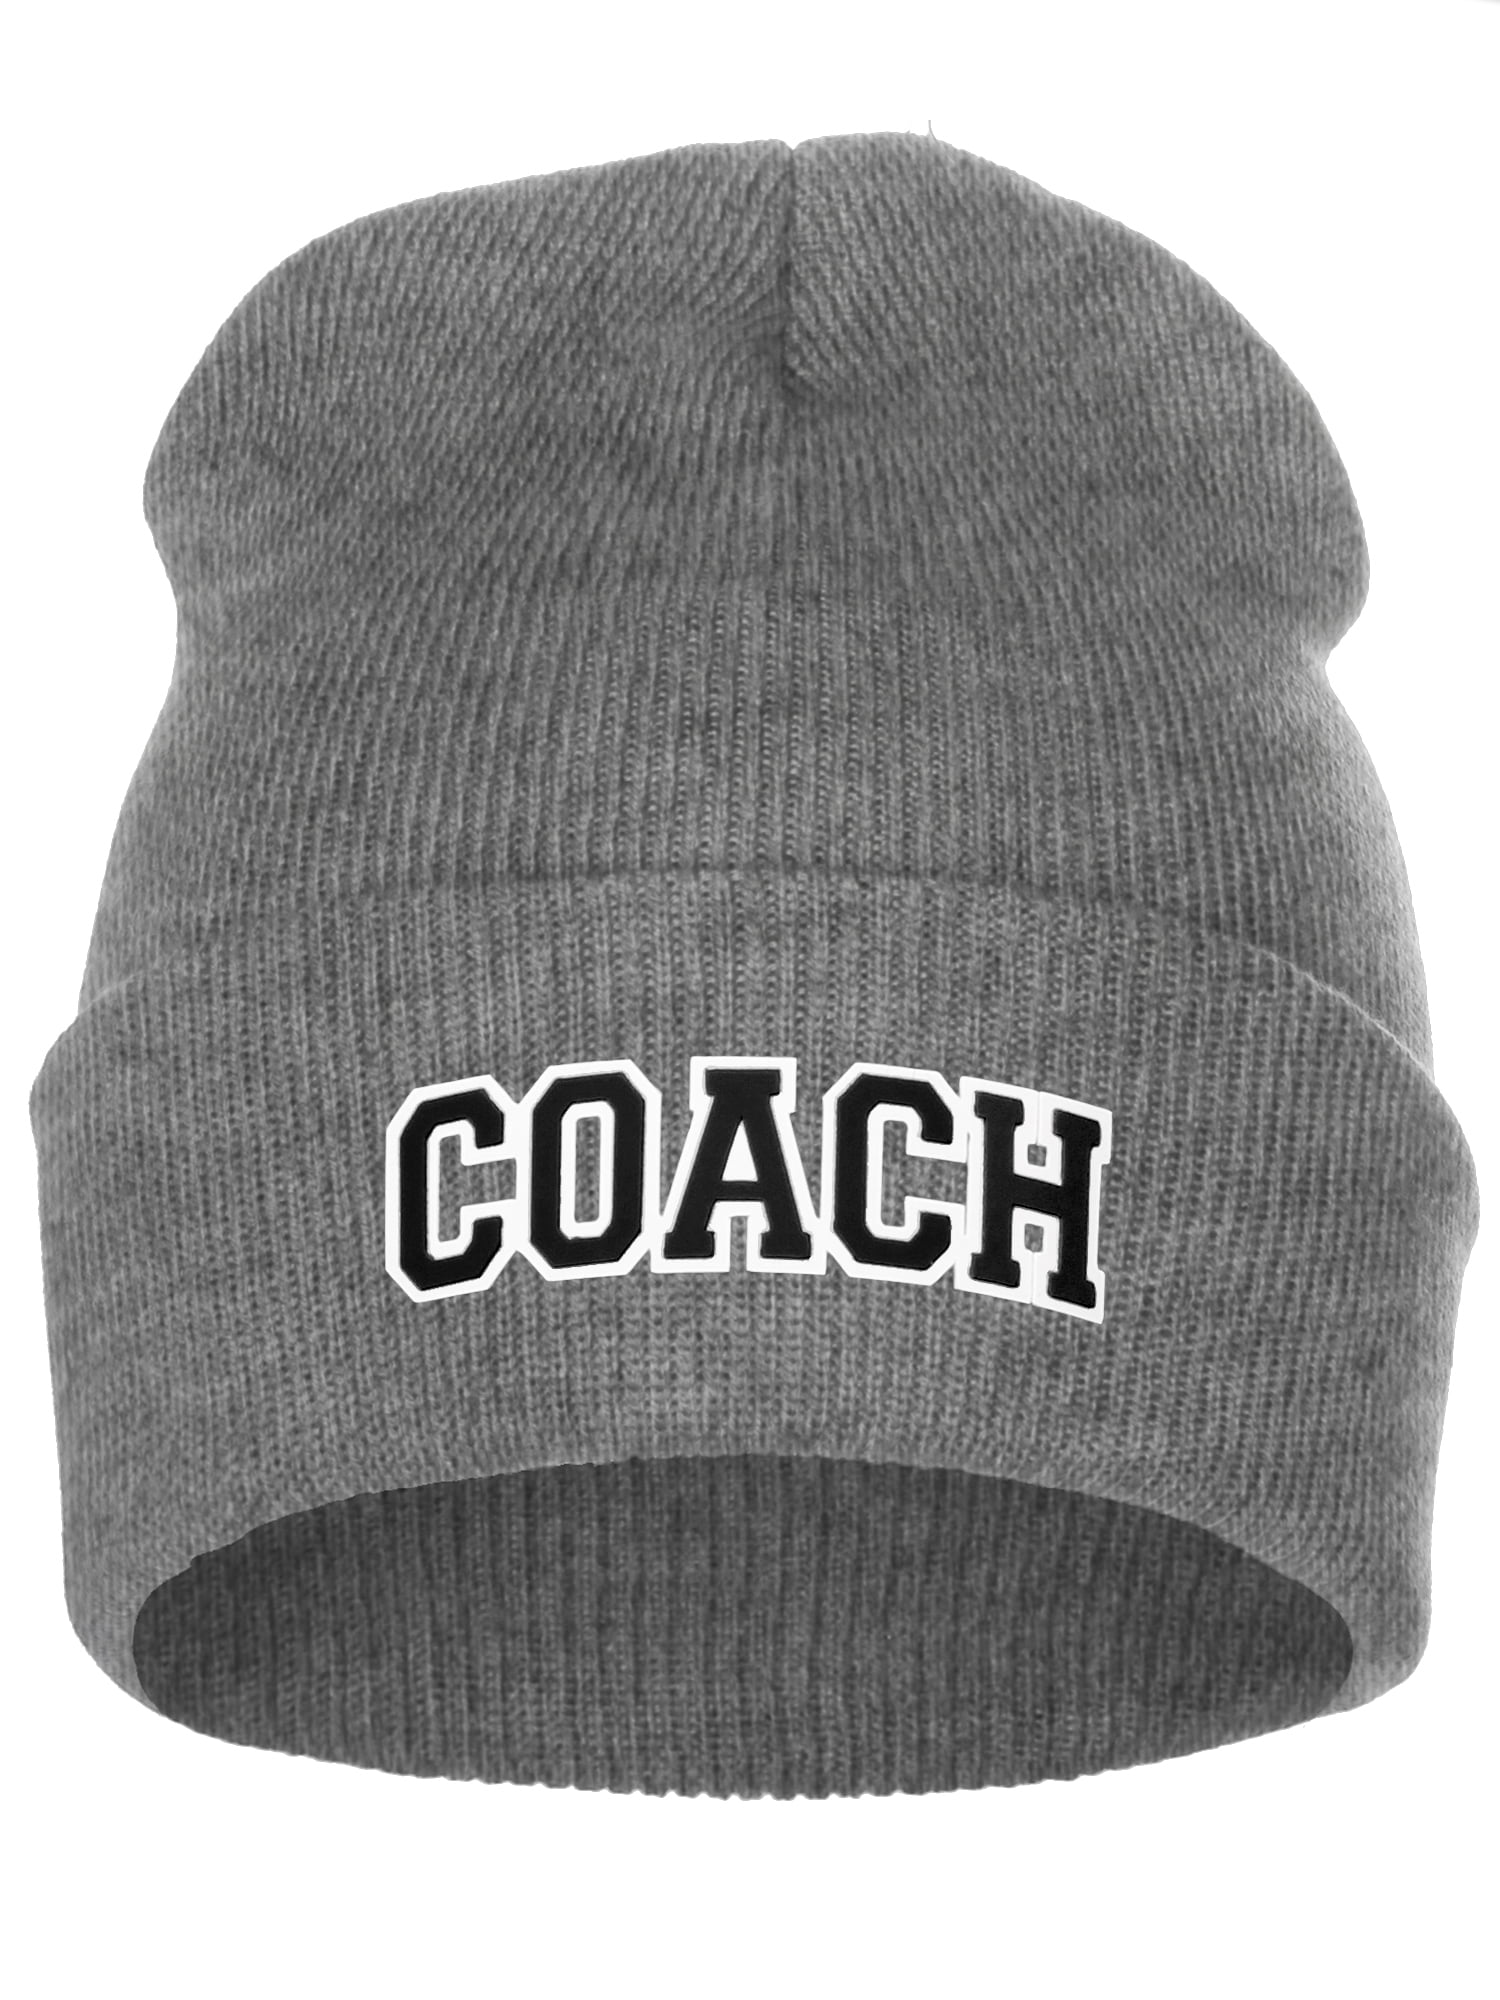 White I&W Cuffed Winter Beanie Coach Team Nay Hat, Sports Knit Beanie Black Arch Letters